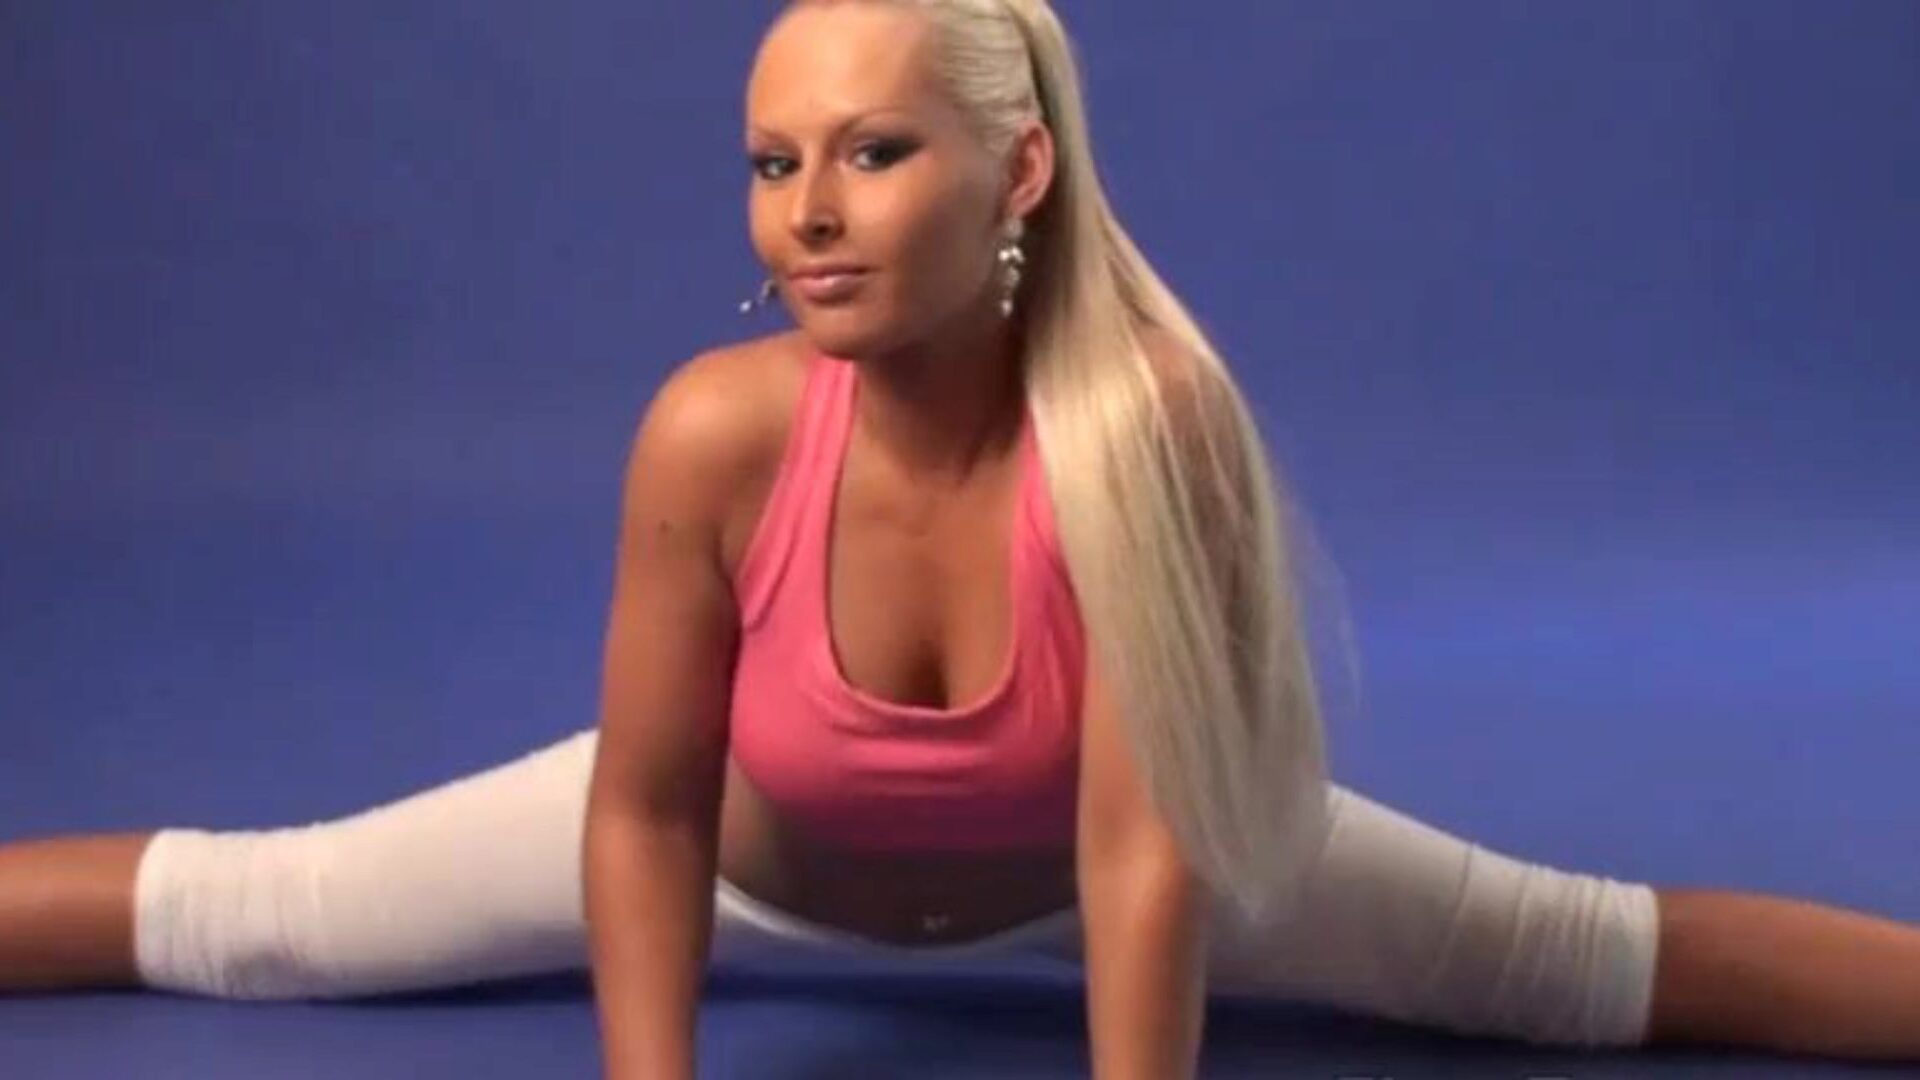 Cute blond demonstrates exposed gymnastics